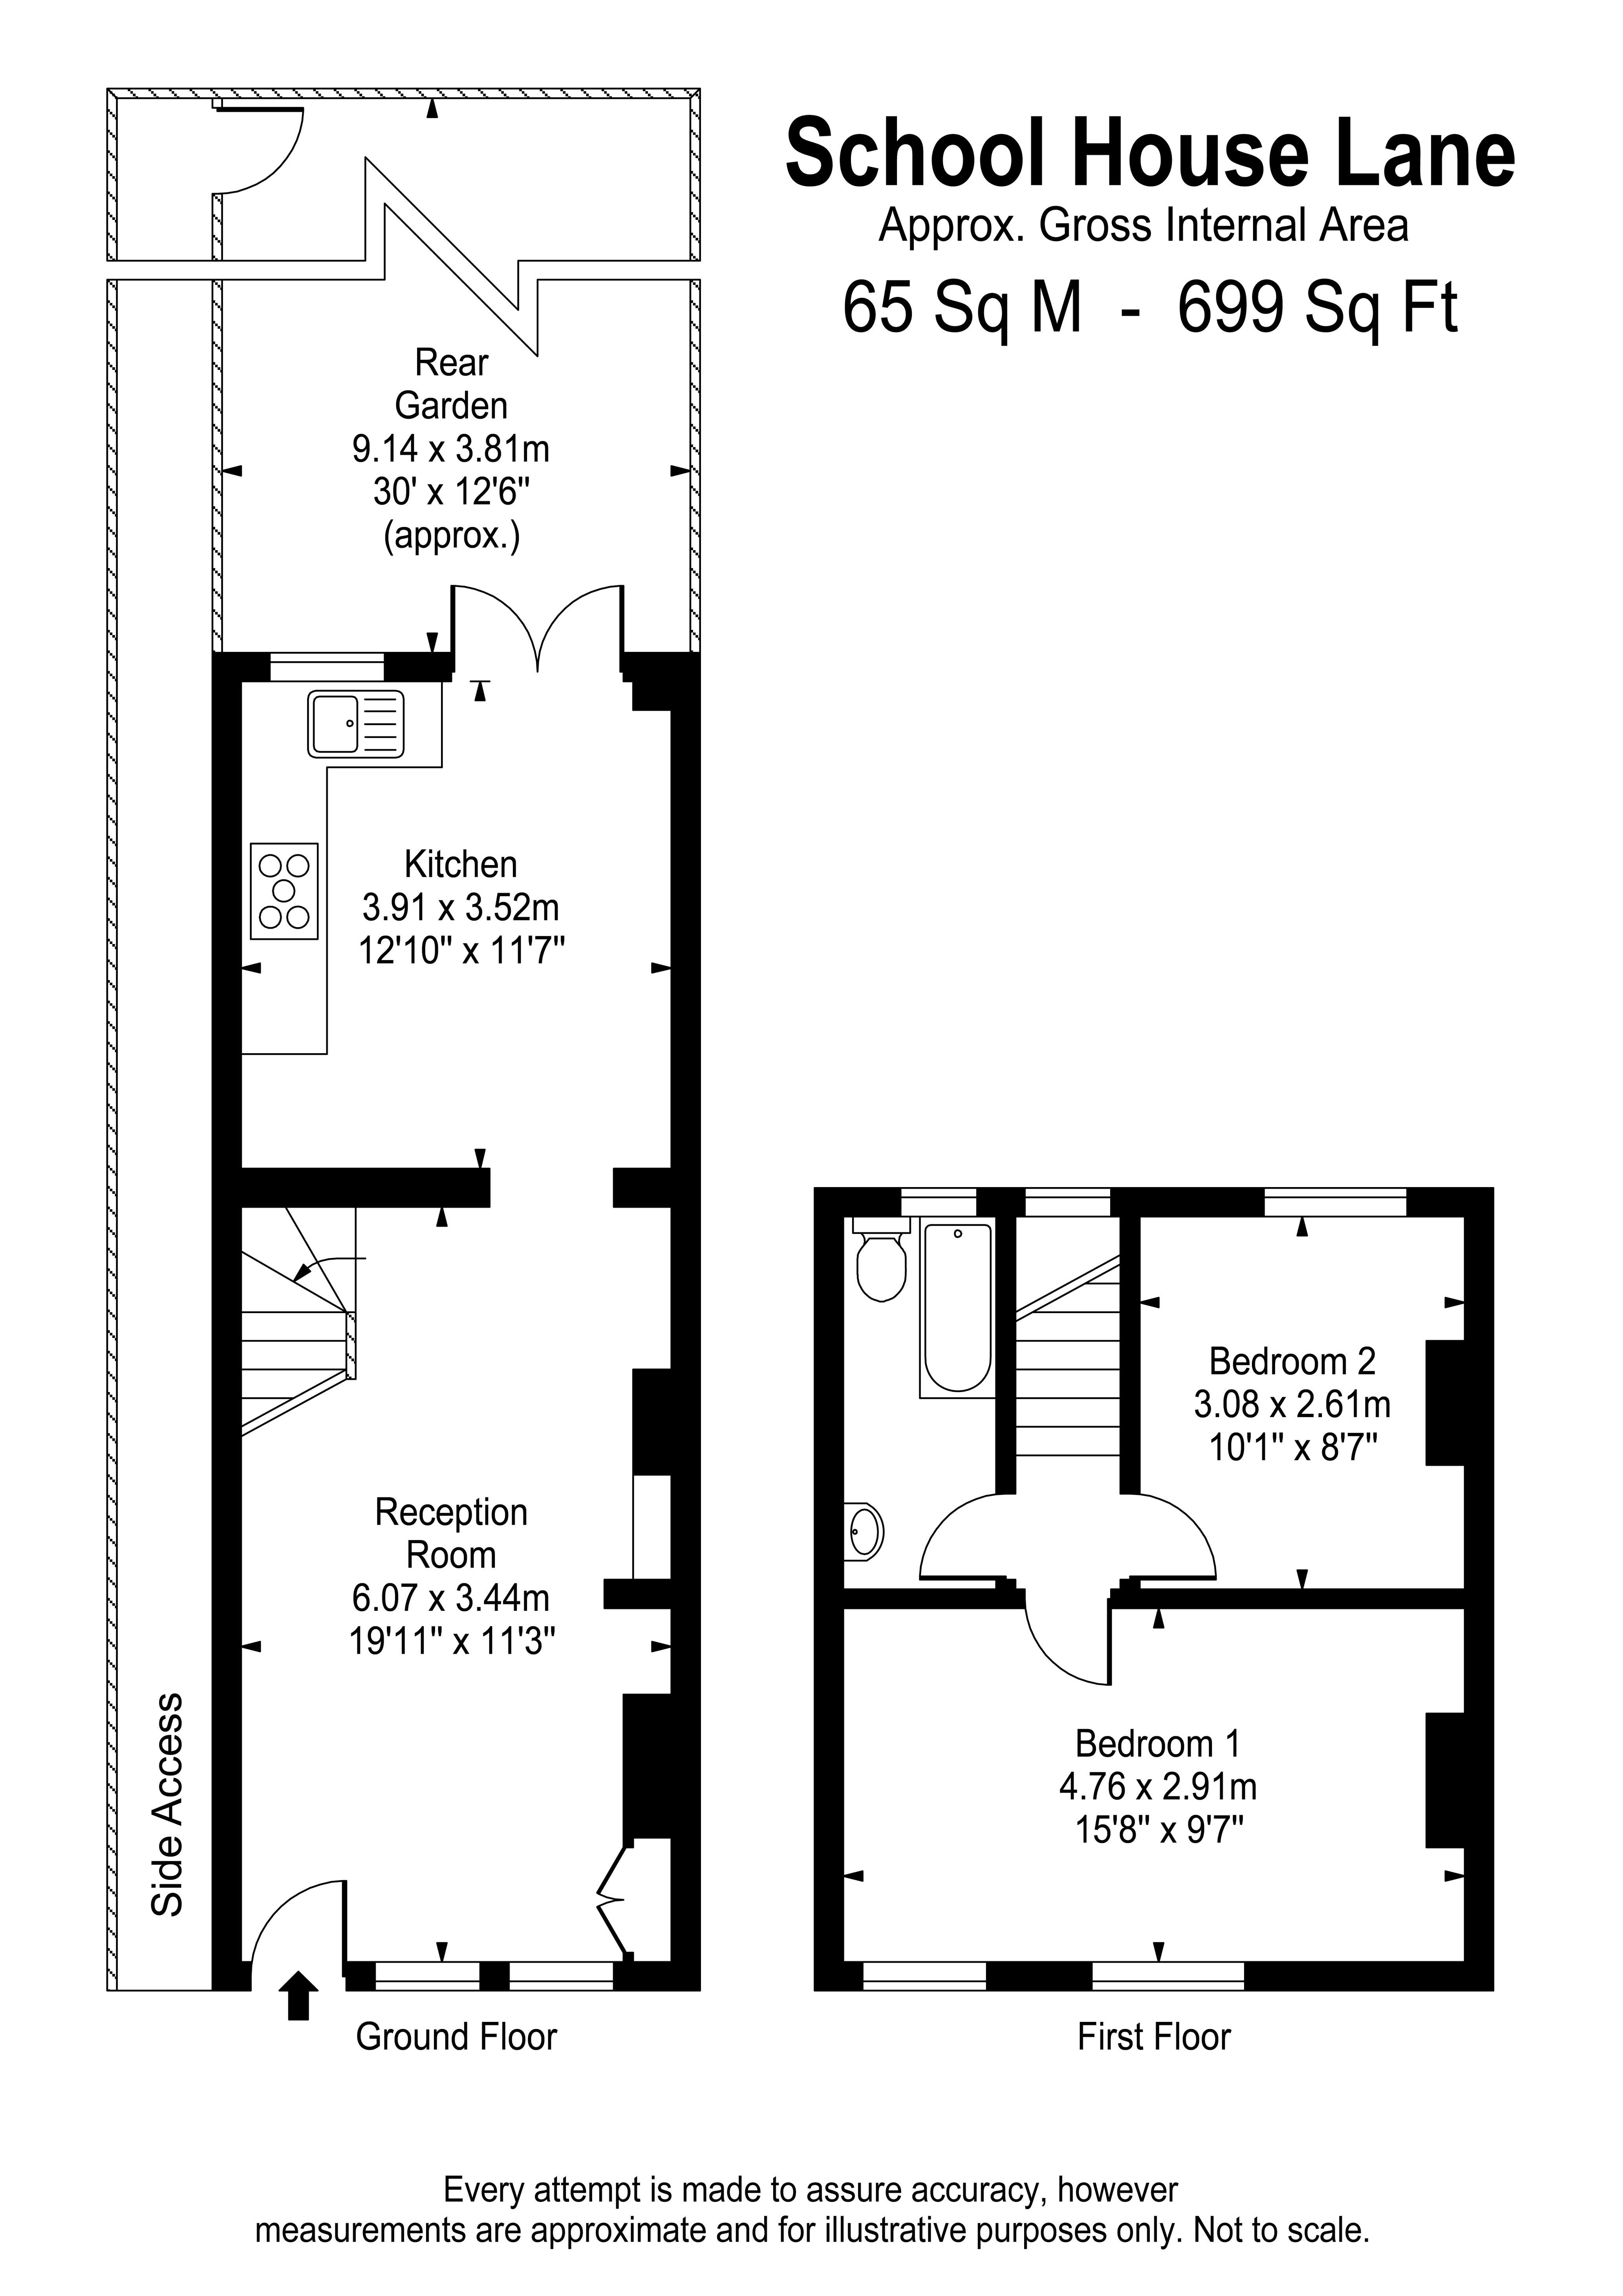 Floorplans For School House Lane, Teddington